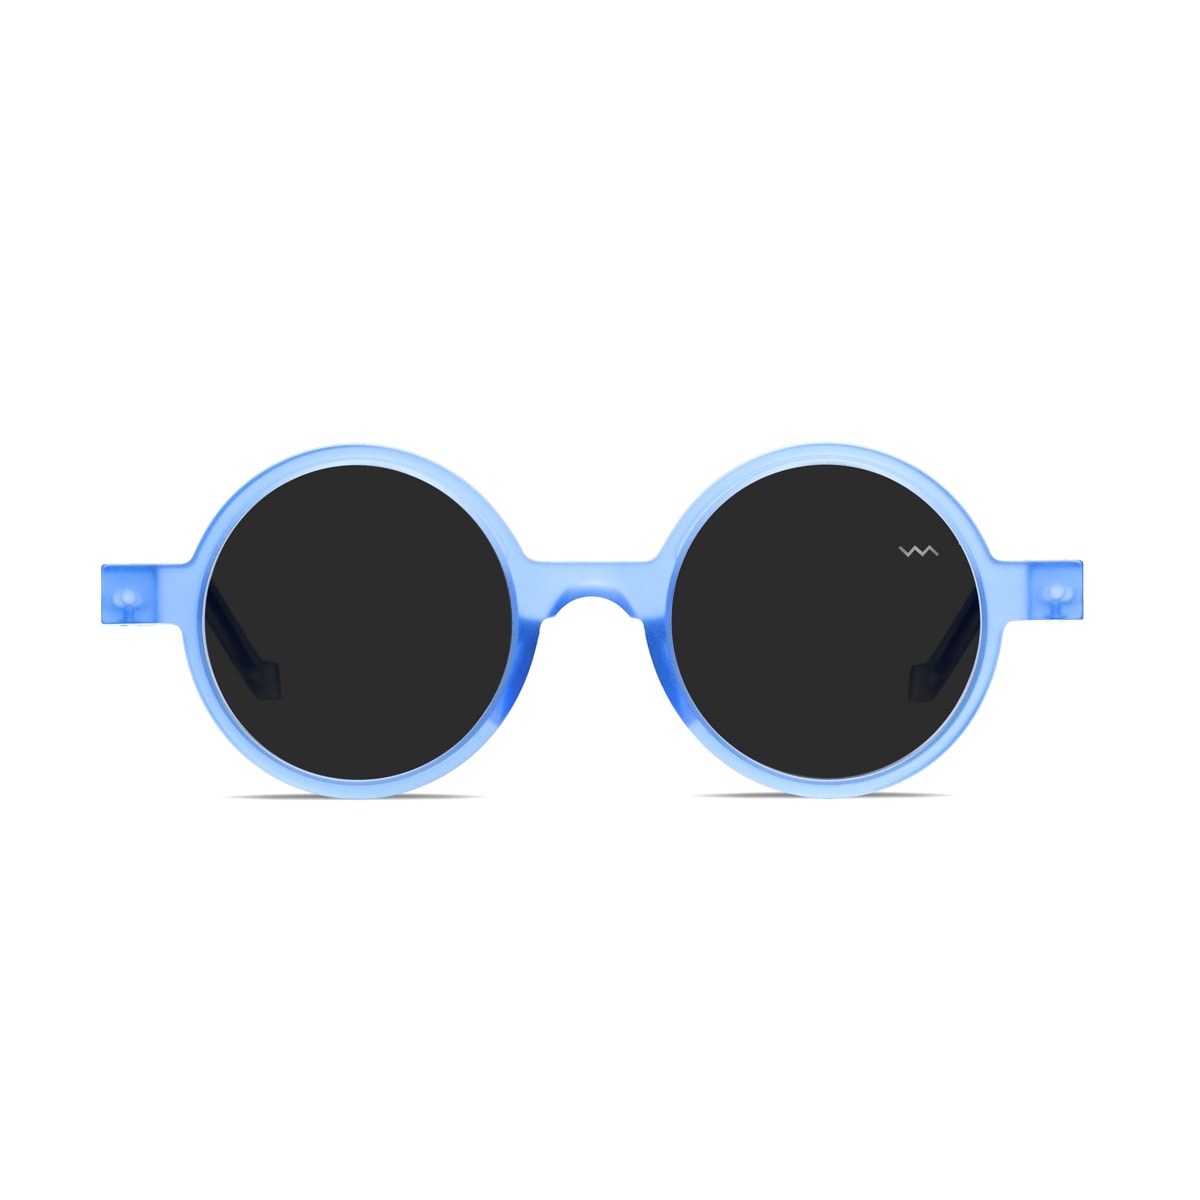 Wl0006 White Label Crystal Blue Matte Sunglasses